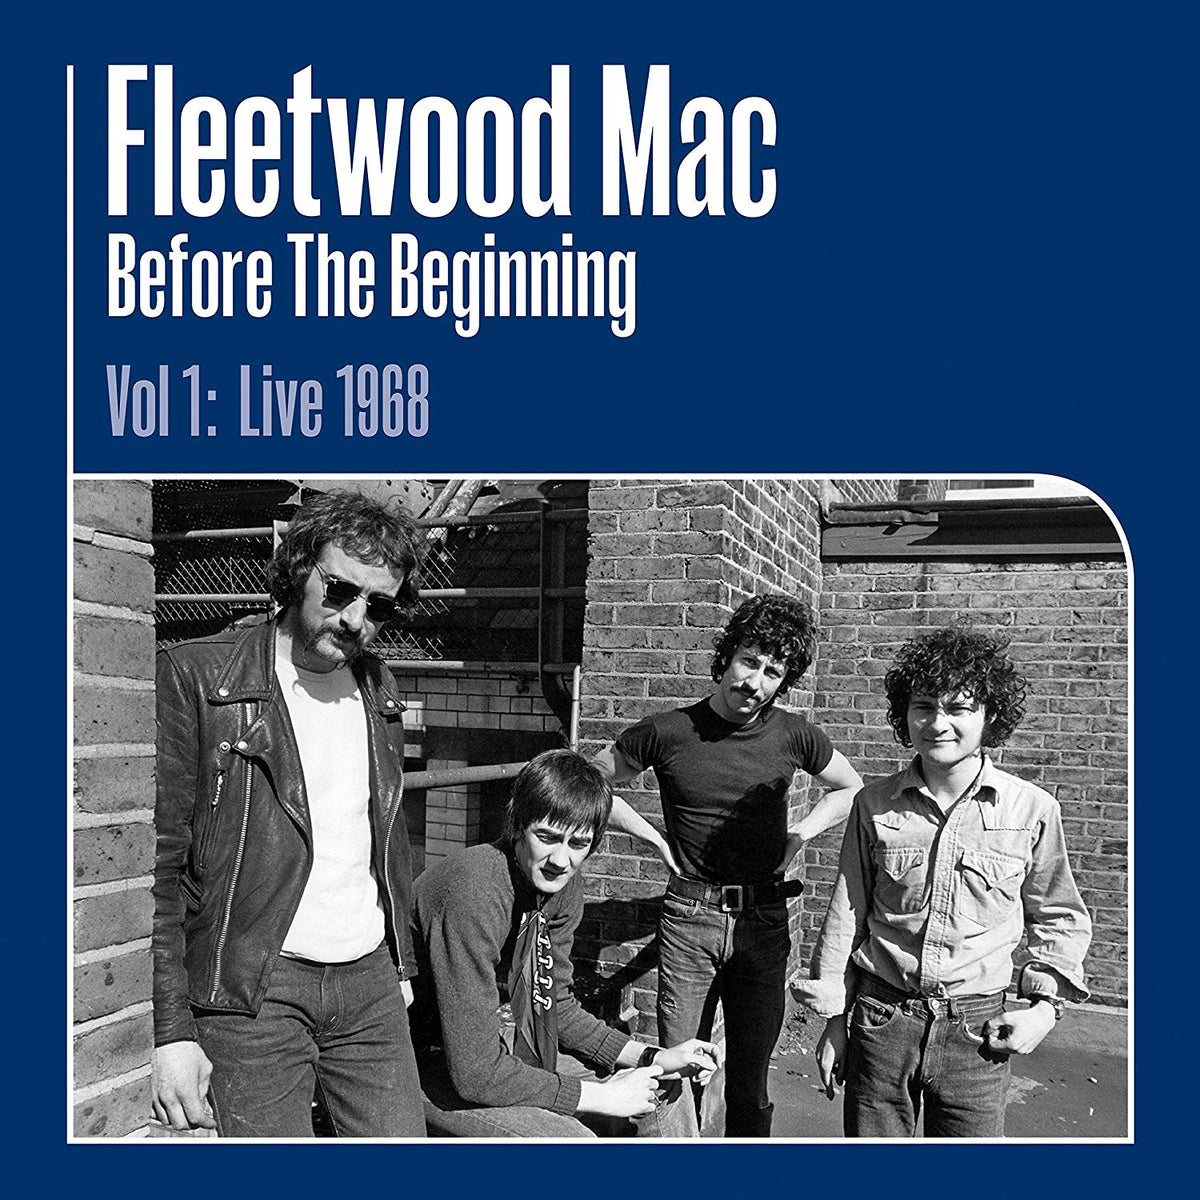 Fleetwood Mac - Before The Beginning Vol 1: Live 1968